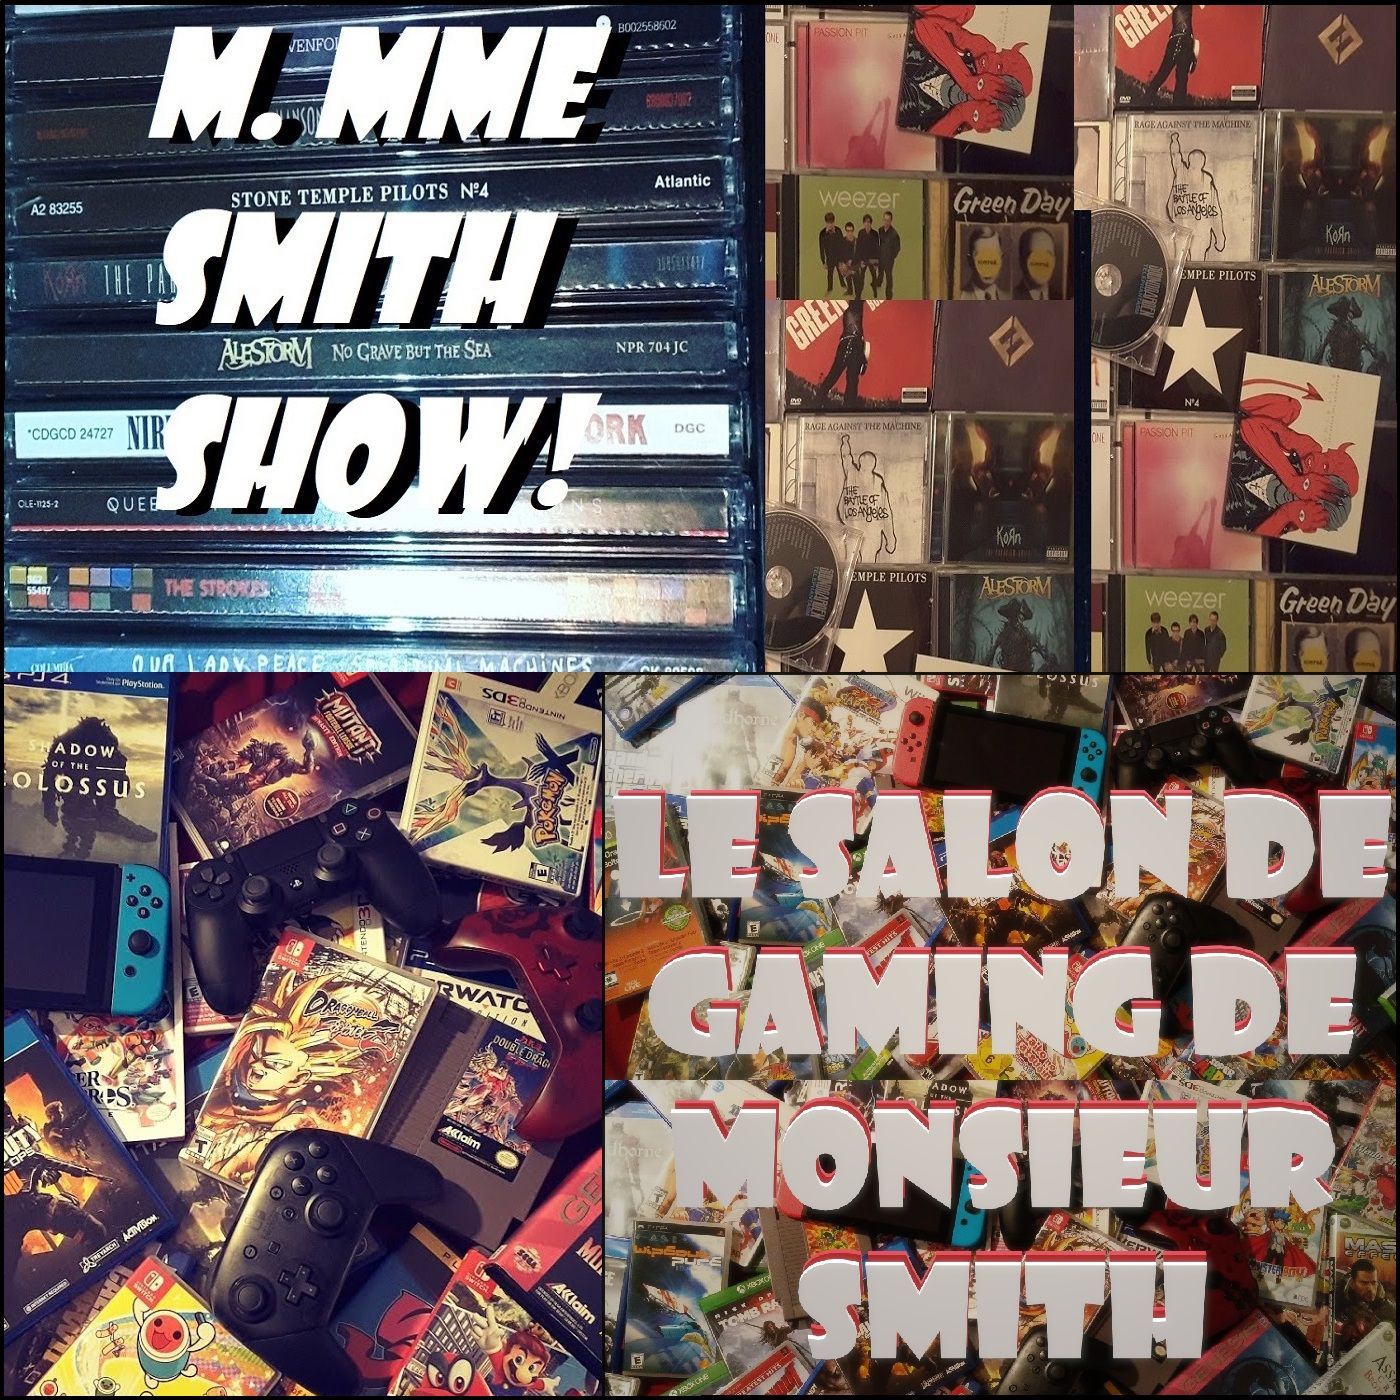 Le Salon de Gaming de Monsieur Smith